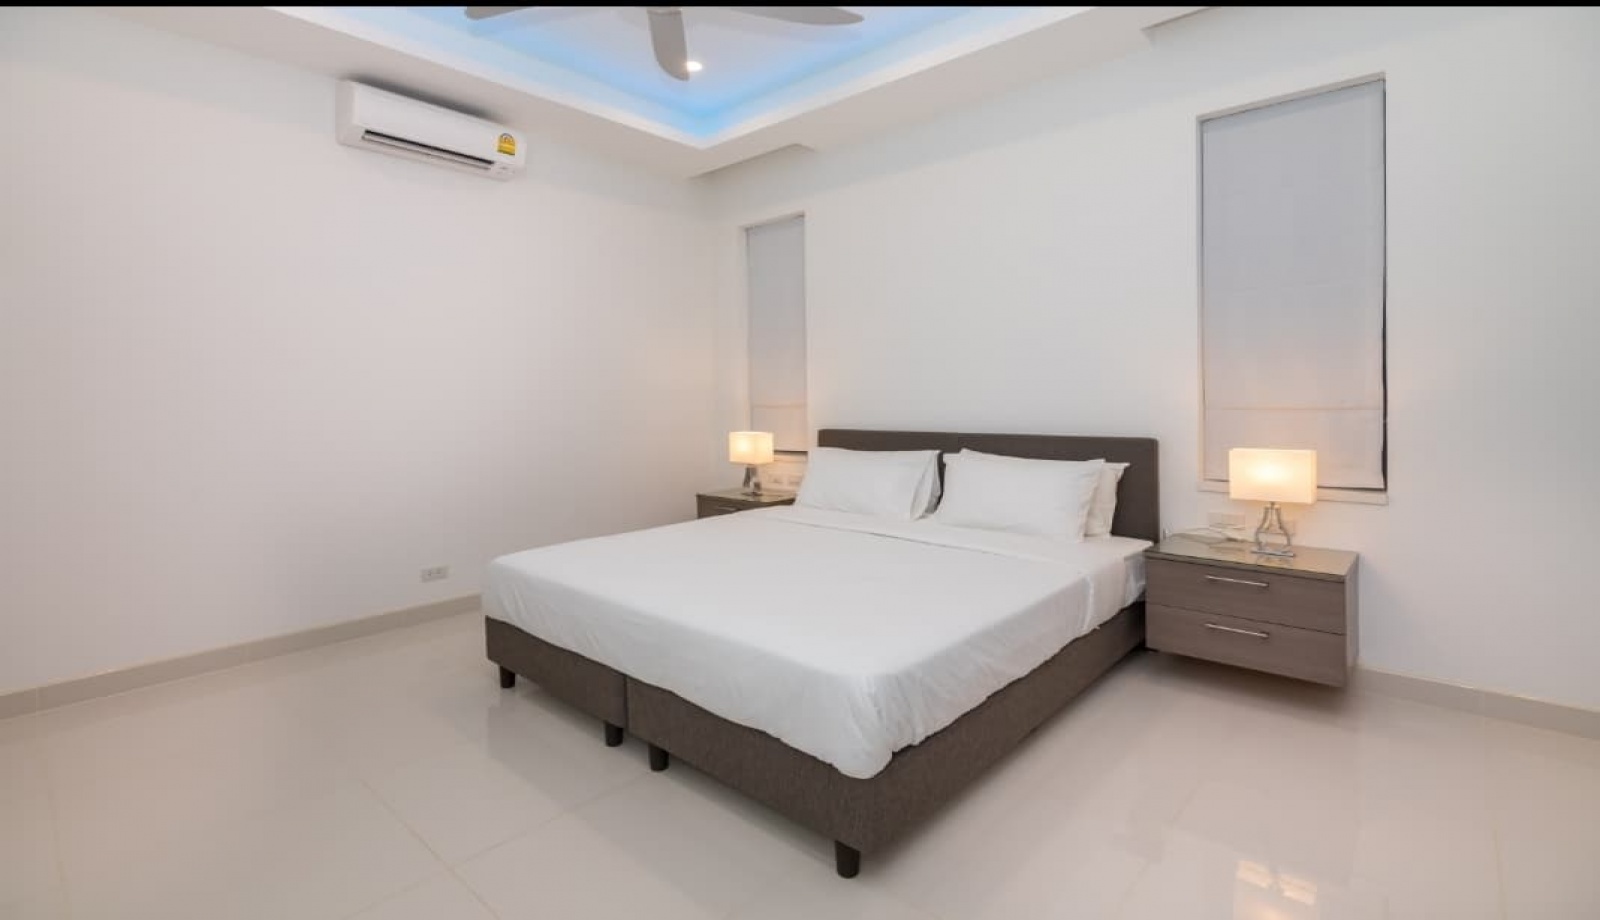 East Pattaya, 4 Bedrooms Bedrooms, ,4 BathroomsBathrooms,House,House For Sale,1151